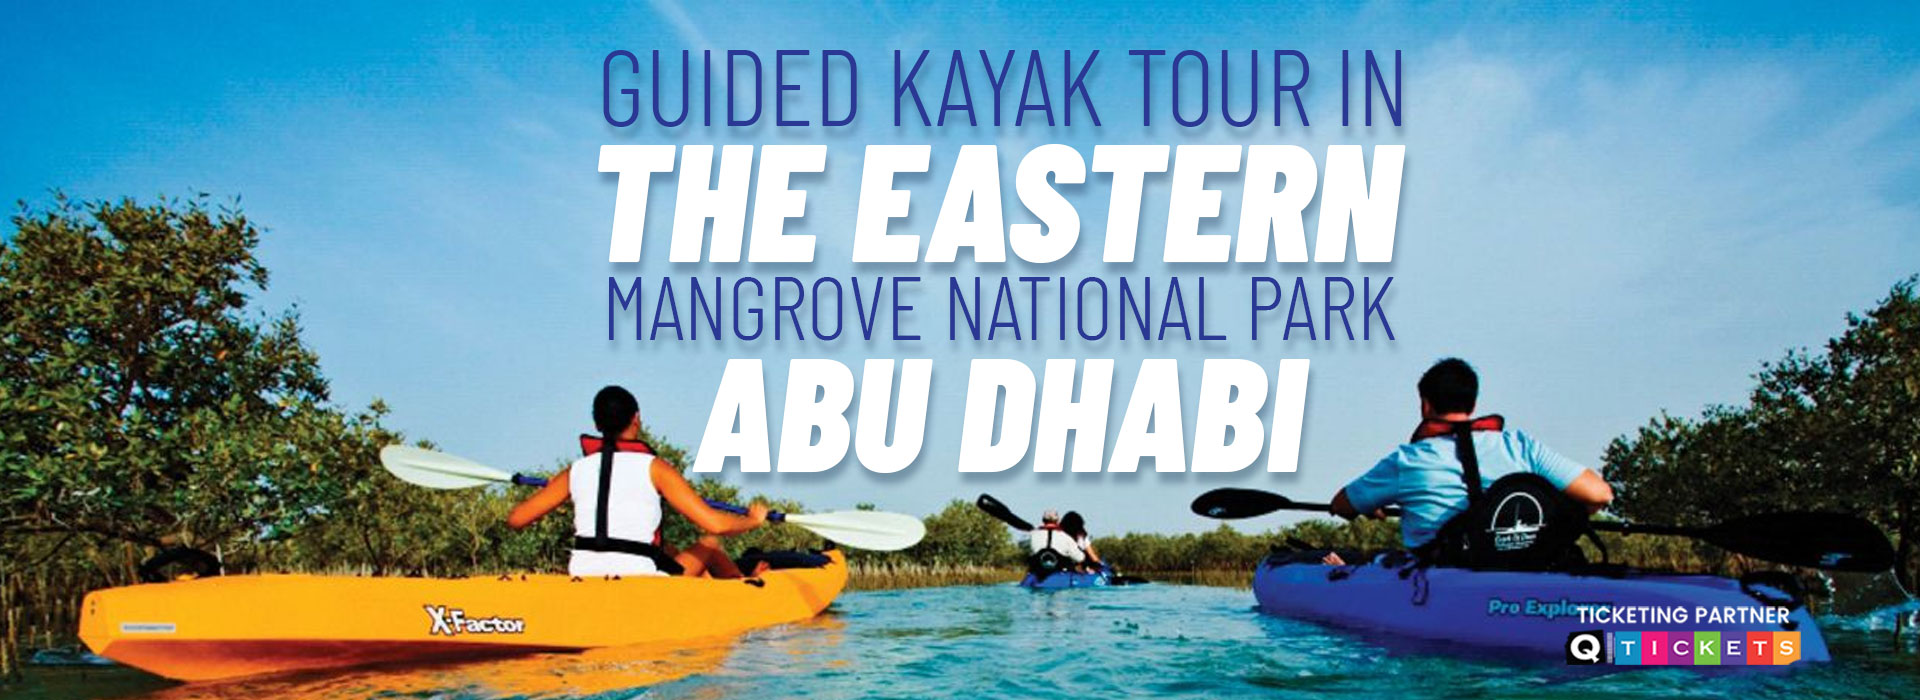 Guided Kayak Tour in the Eastern Mangrove National Park Abu Dhabi | Just Dubai